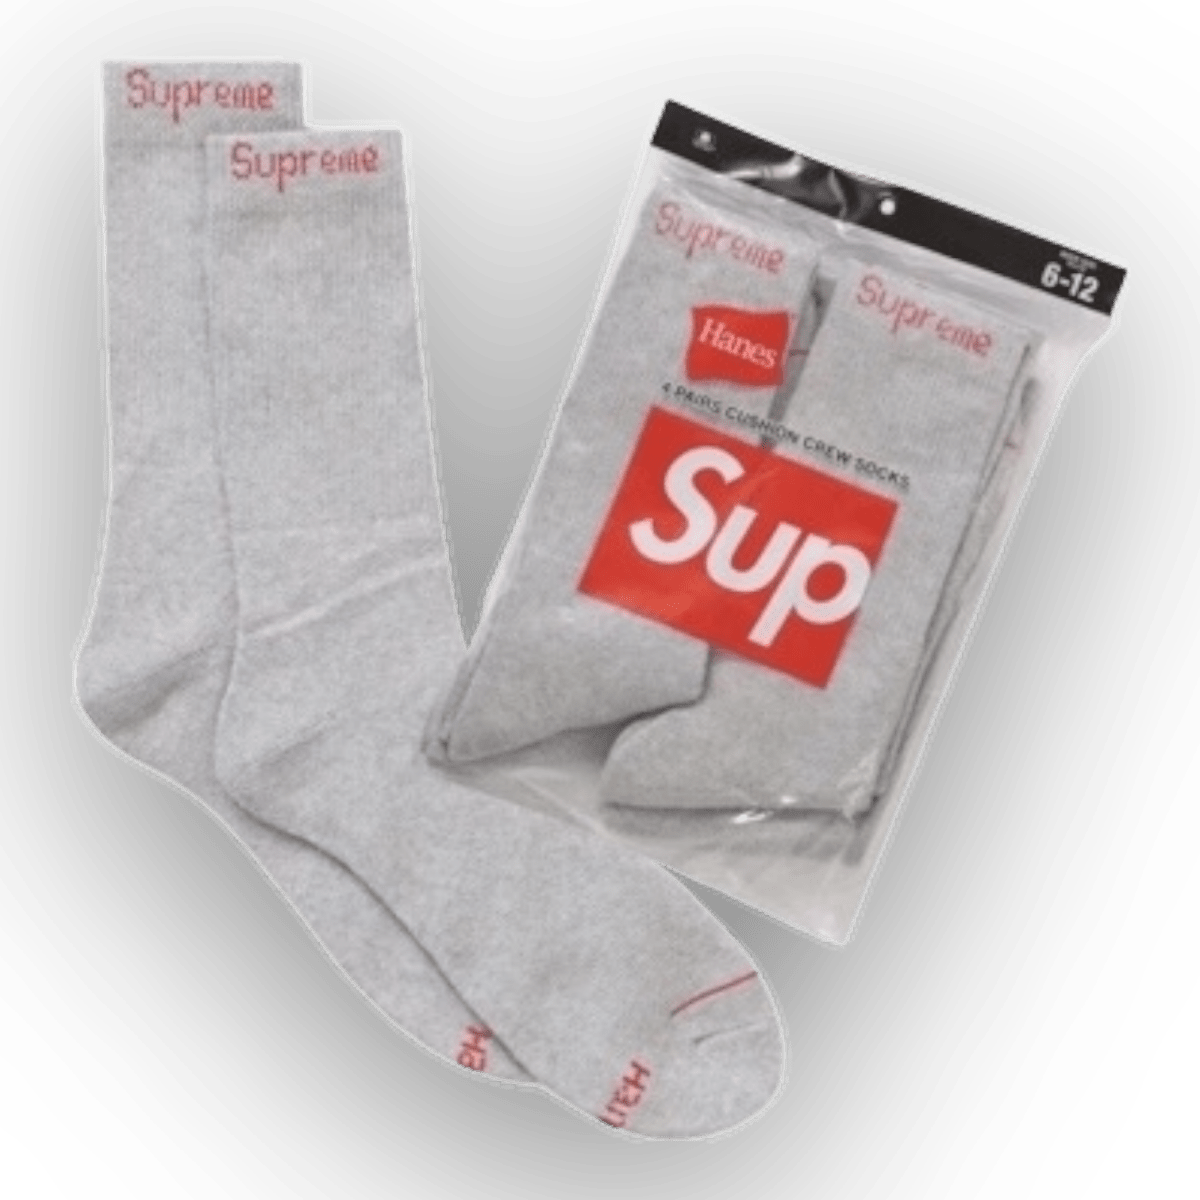 Supreme Hanes Crew Socks Grey (4 Pack) - Outerwear - Jawns on Fire Sneakers & Streetwear